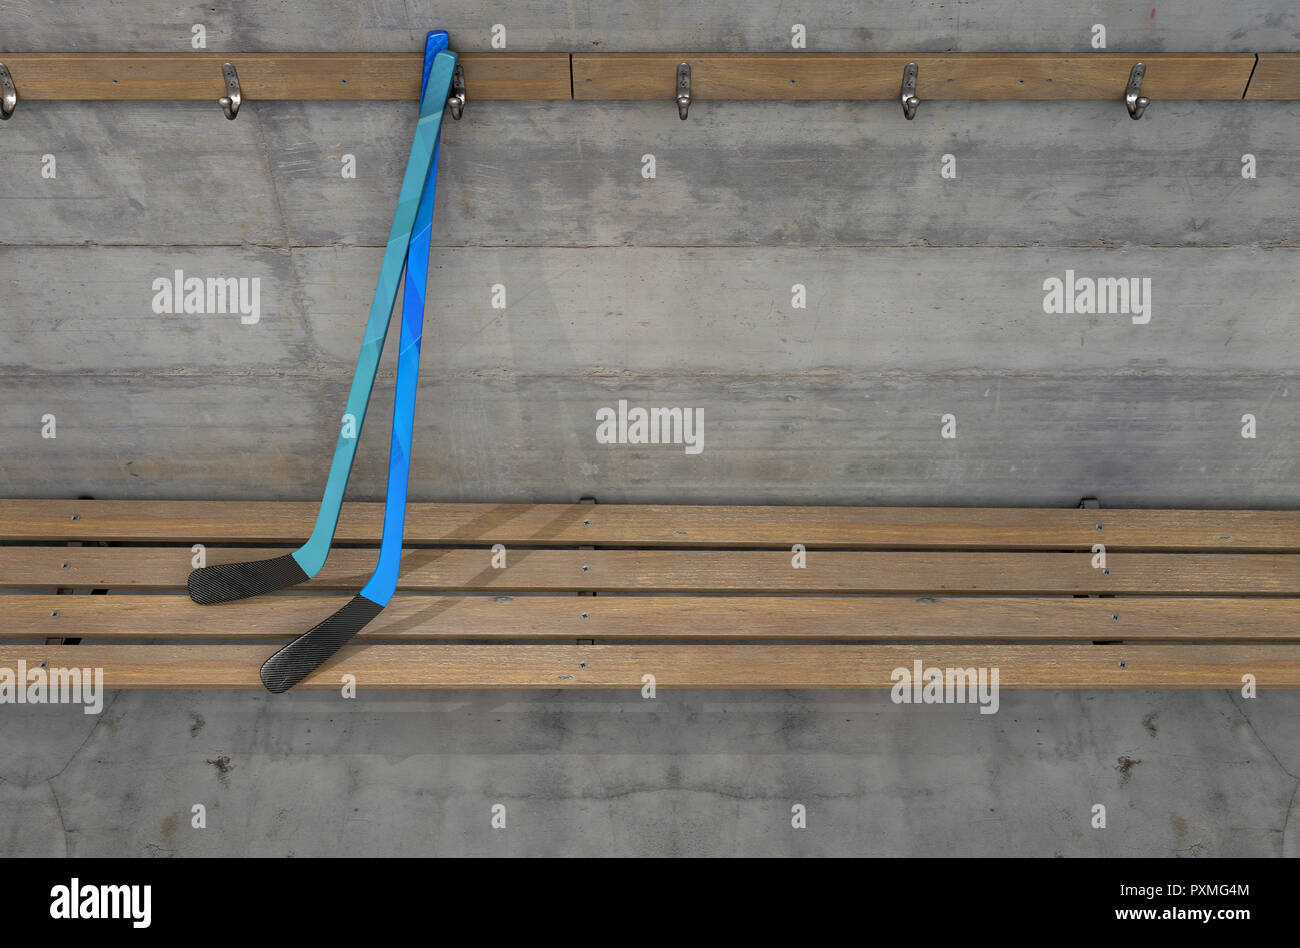 Two ice hocket sticks on a wooden bench in a rundown sports locker change room - 3D render Stock Photo